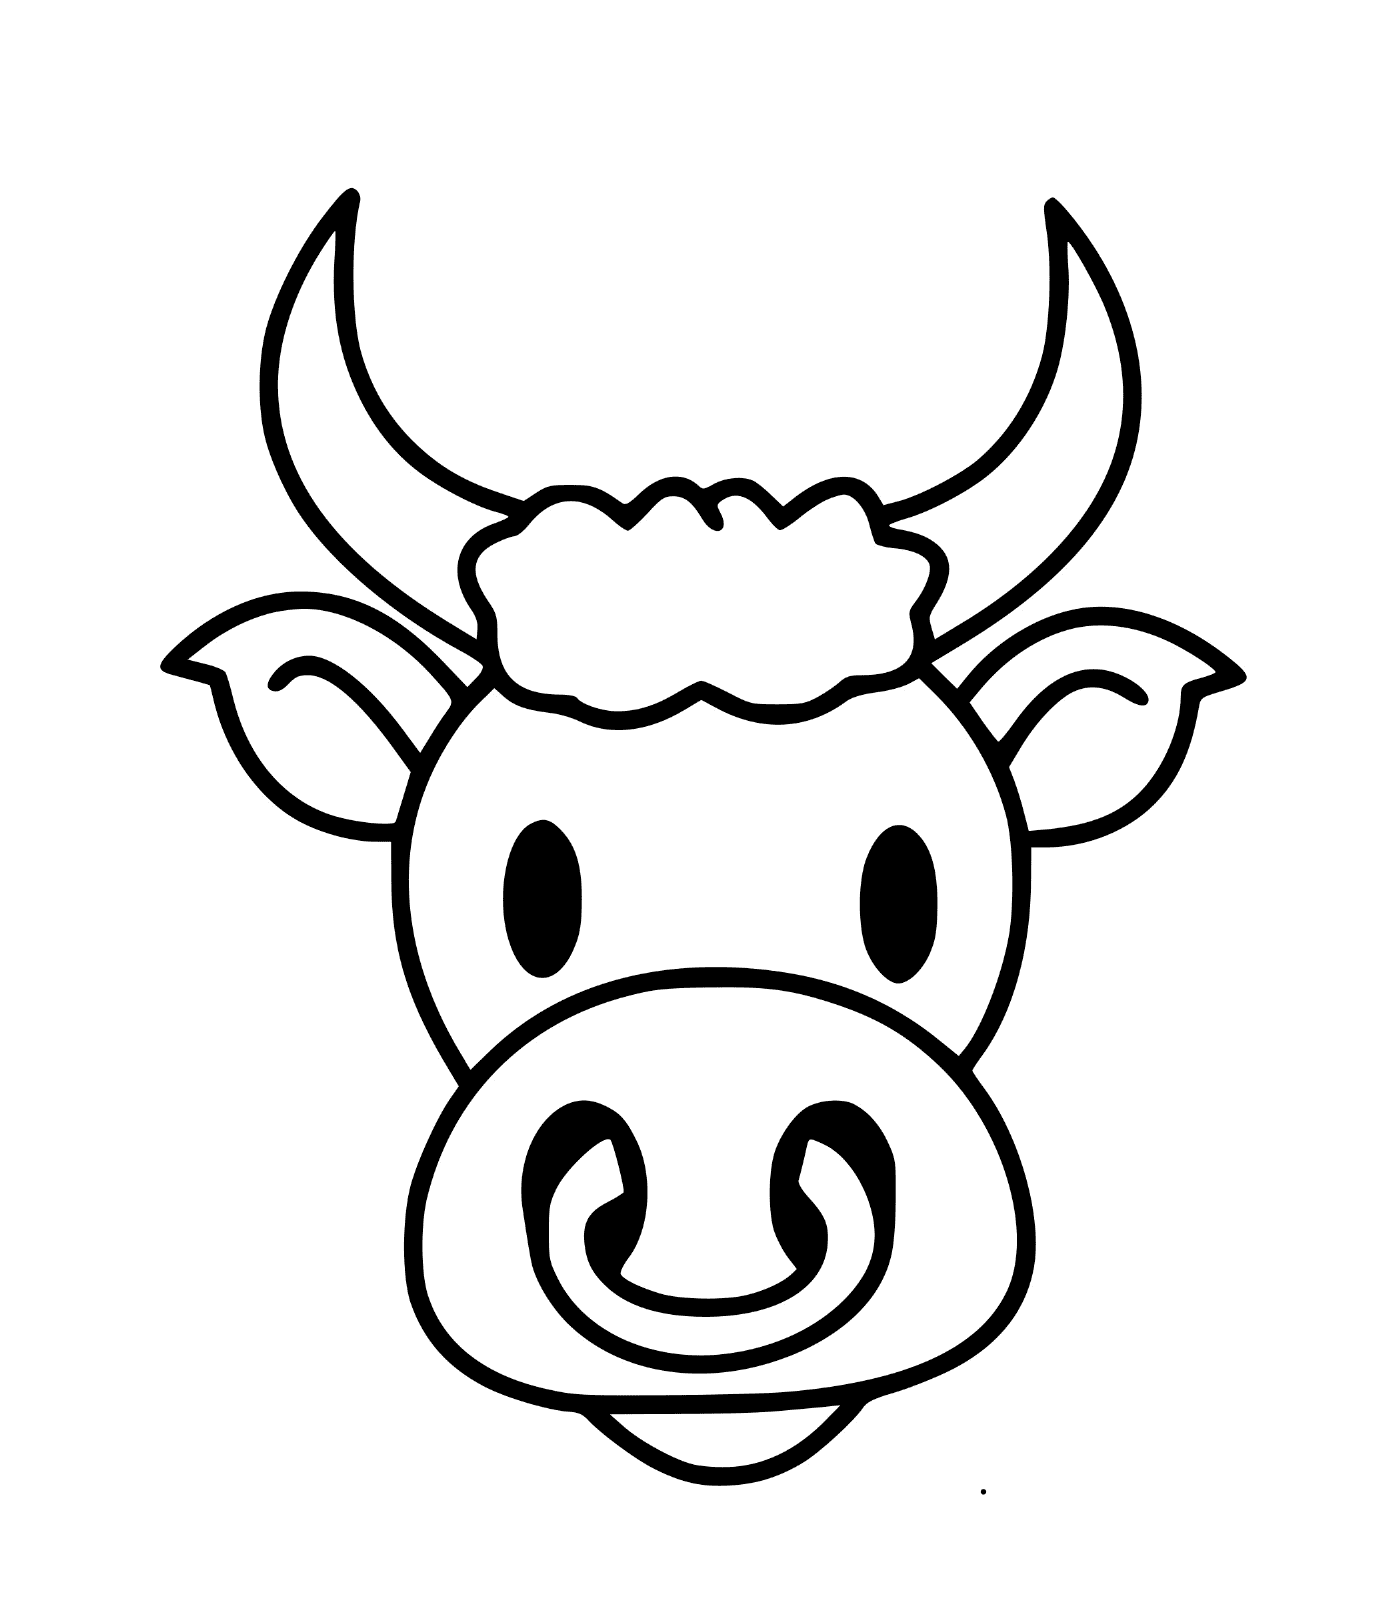  Cabeza de toro sonriente 